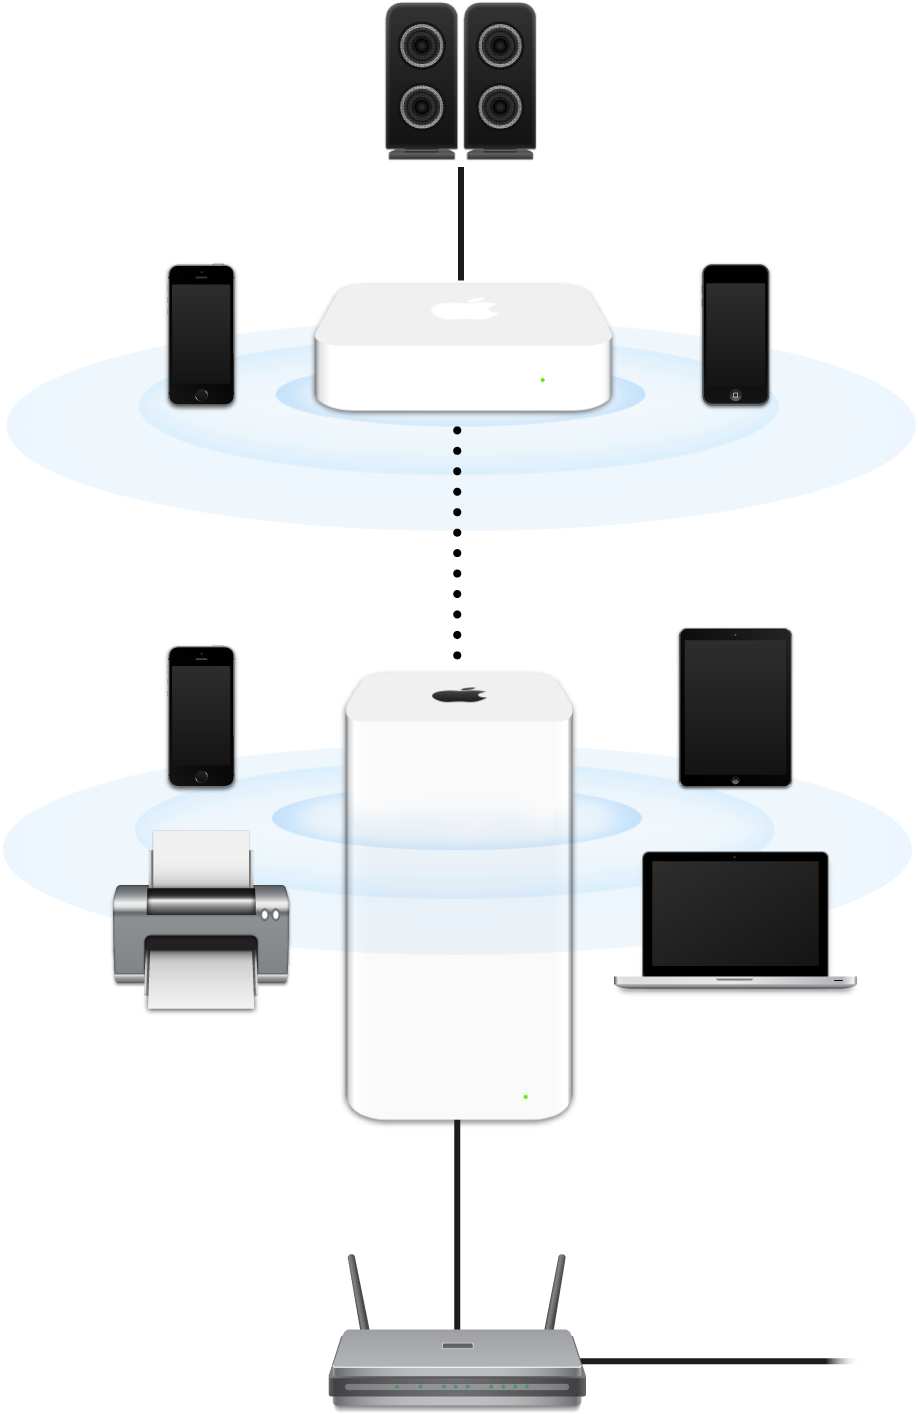 AirPort Extreme 및 AirPort Express를 포함하는 확장된 네트워크가 모뎀에 연결되어 다양한 기기로 송신하는 모습.